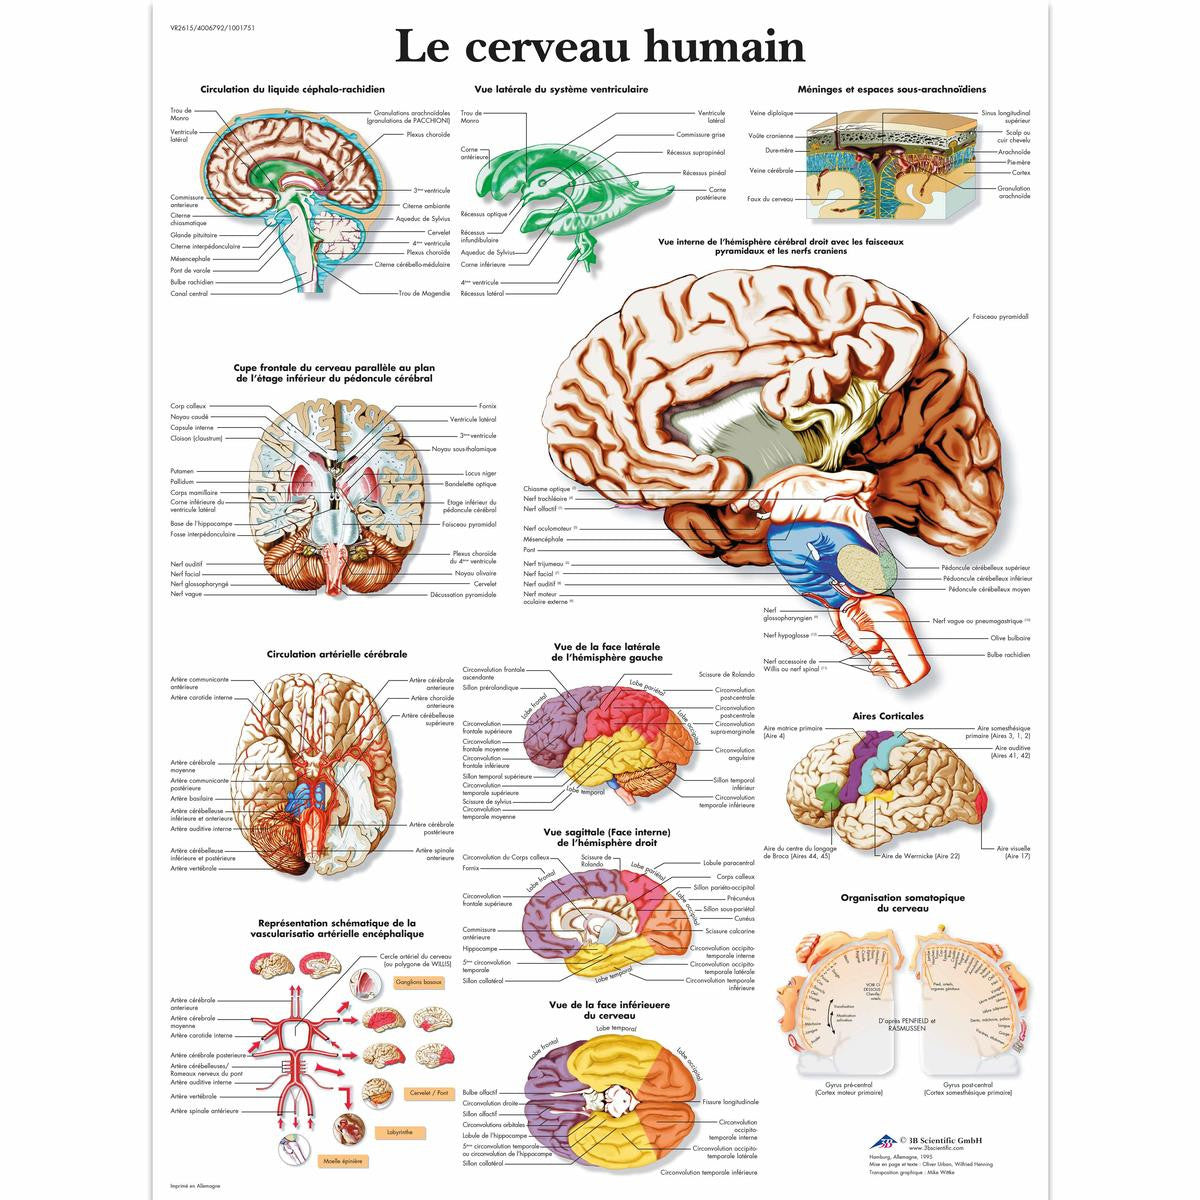 Le Cerveau humain chart